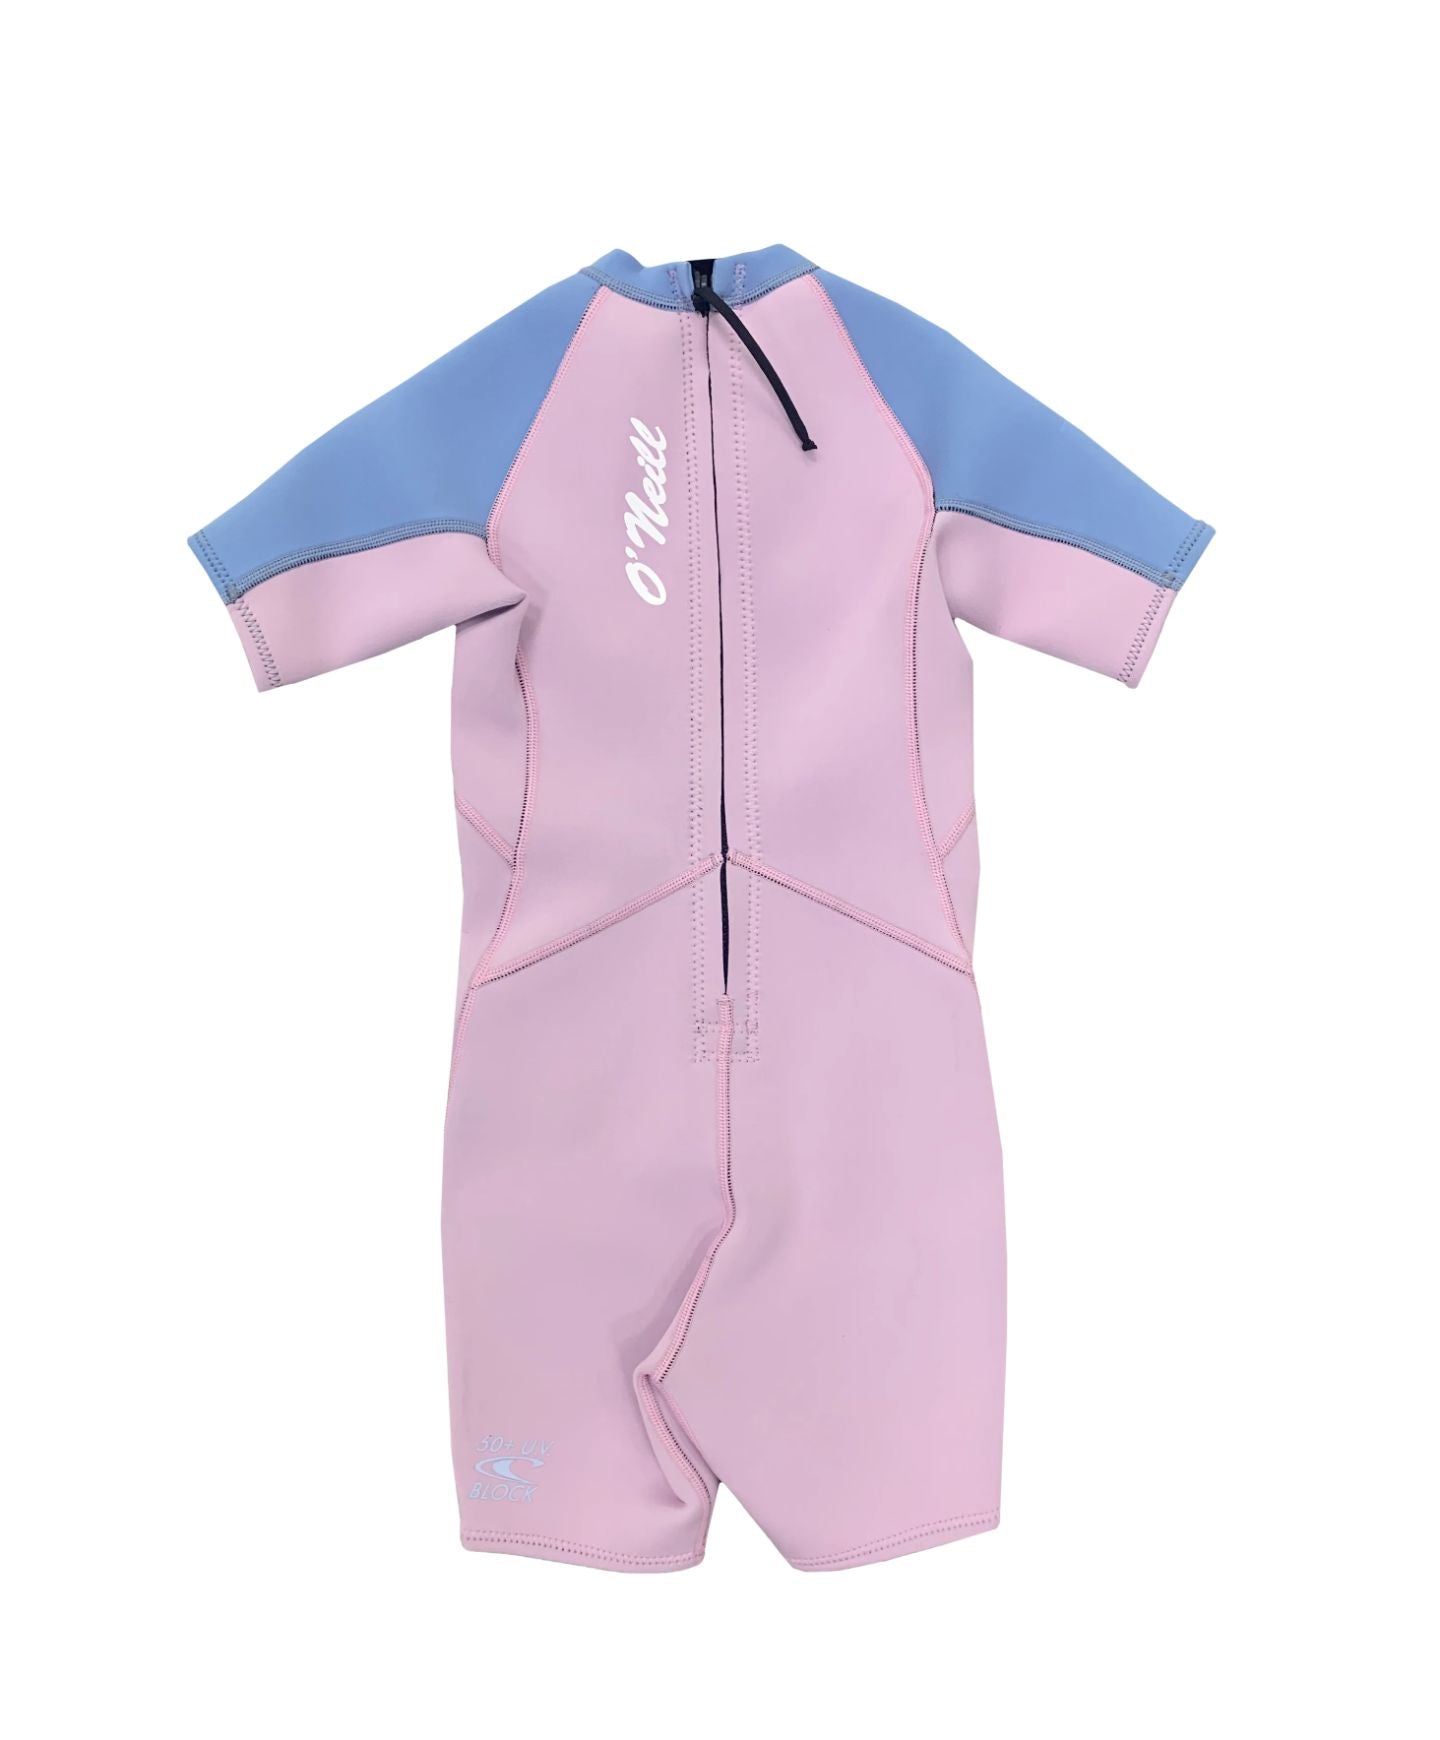 Toddler Reactor Spring Suit Wetsuit - Pink